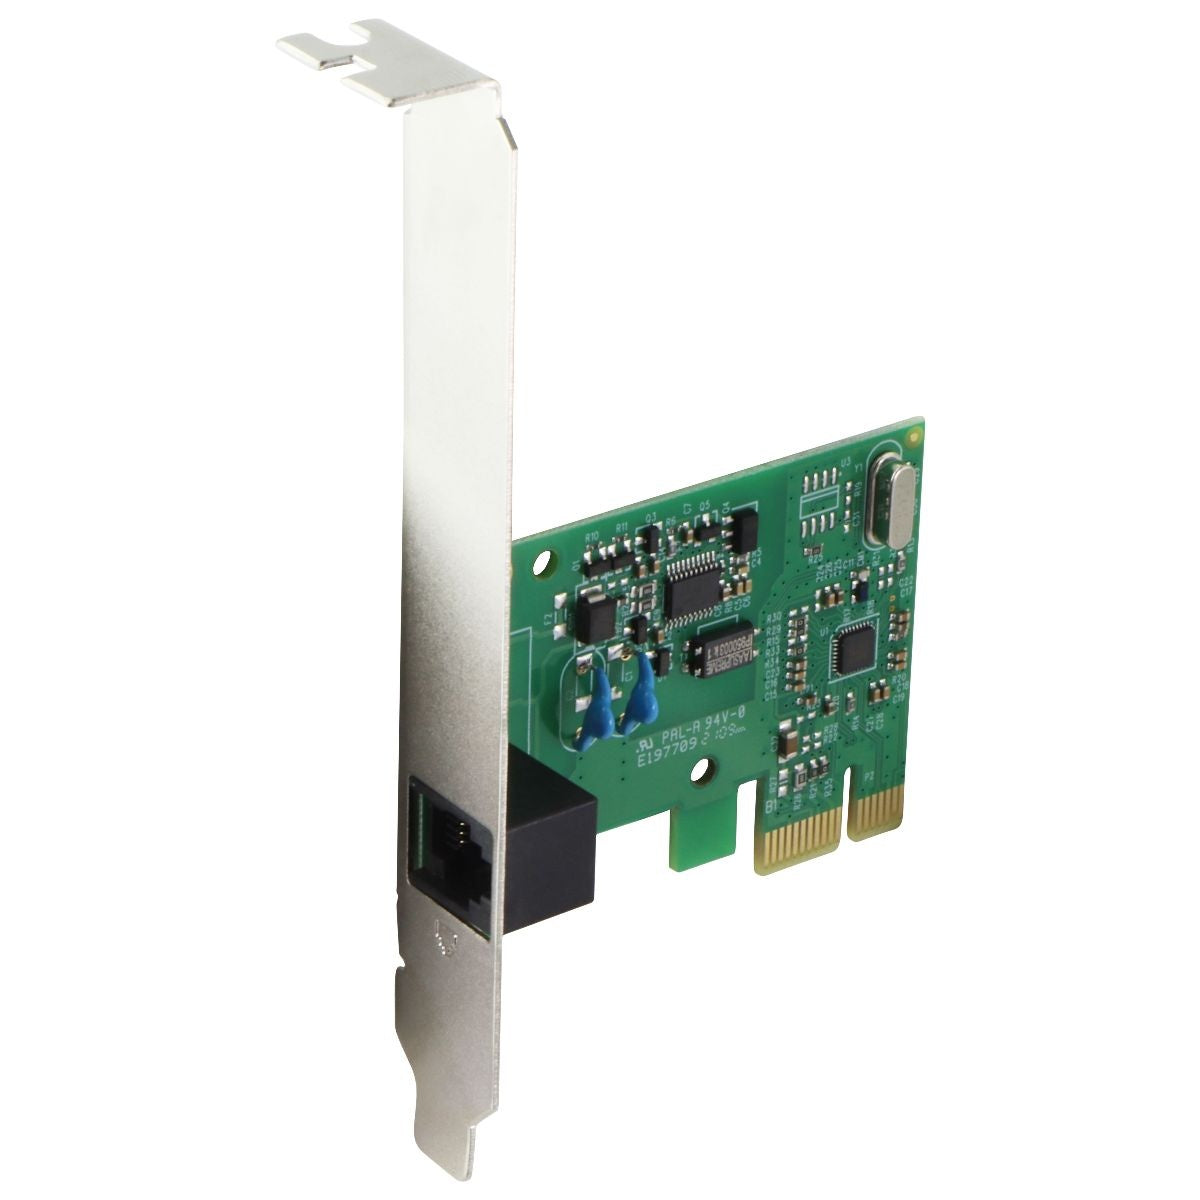 USRobotics 56K V.92 PCI Express Dial-Up Fax and Data Modem (USR5638) Internal Modem Cards USRobotics    - Simple Cell Bulk Wholesale Pricing - USA Seller